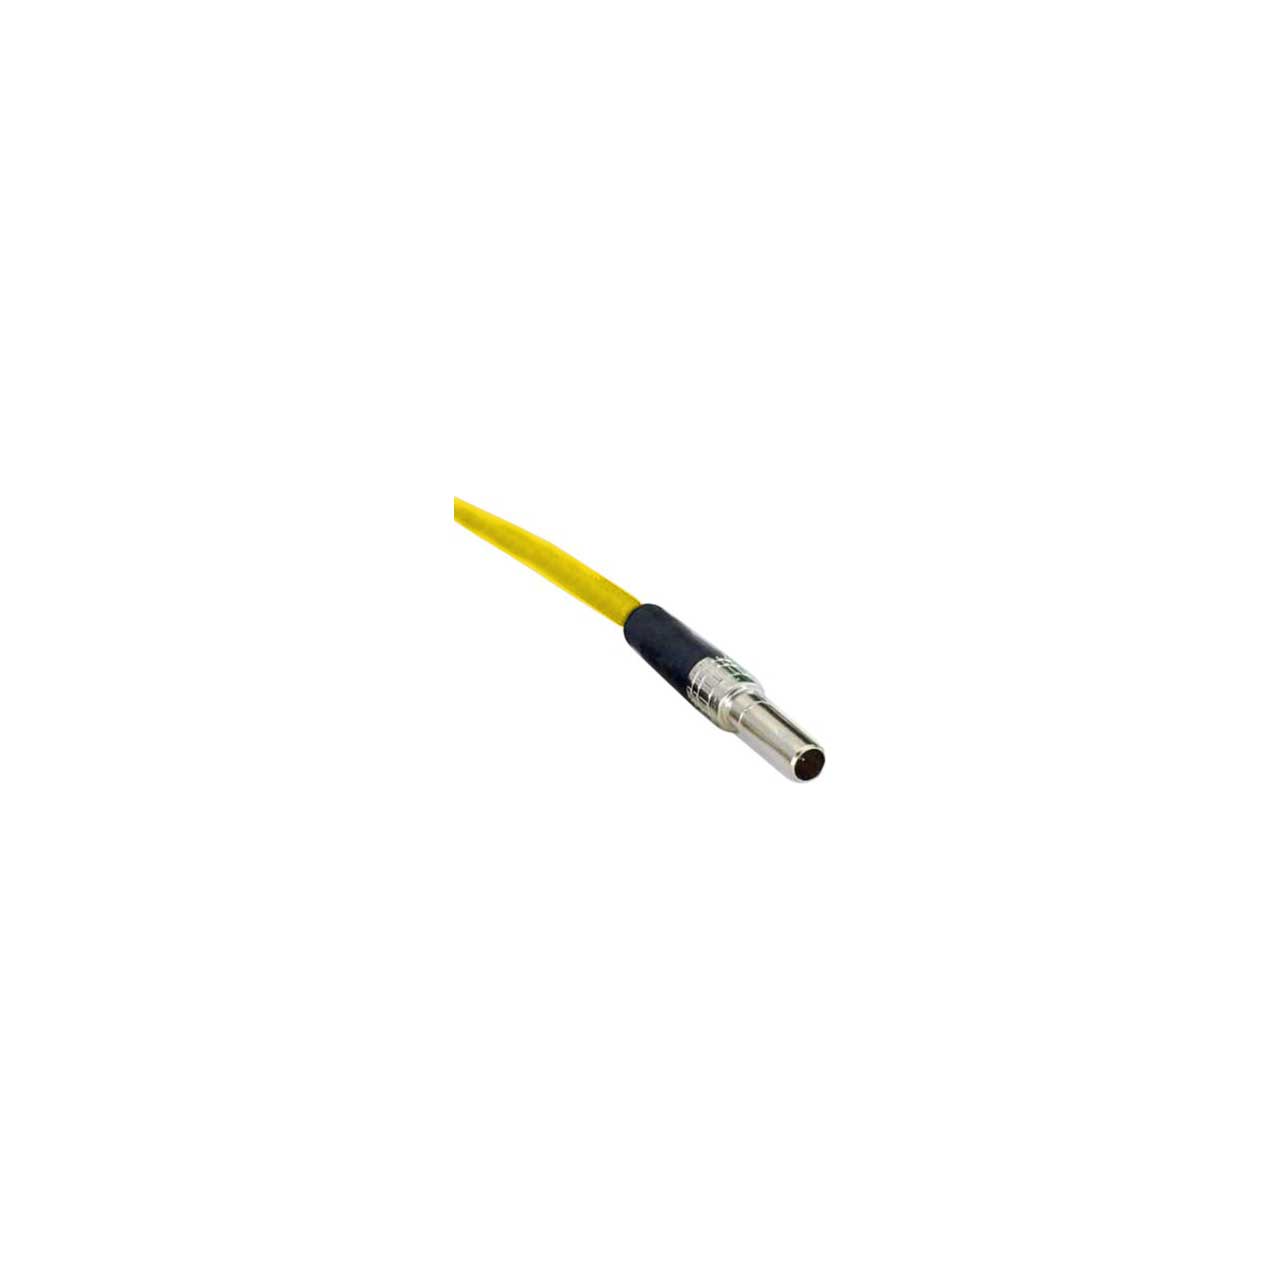 AVP MPC-1-Yellow Midsize 3G HD-SDI Video Patchcord - Yellow - 1 Foot MPC-1-YELLOW